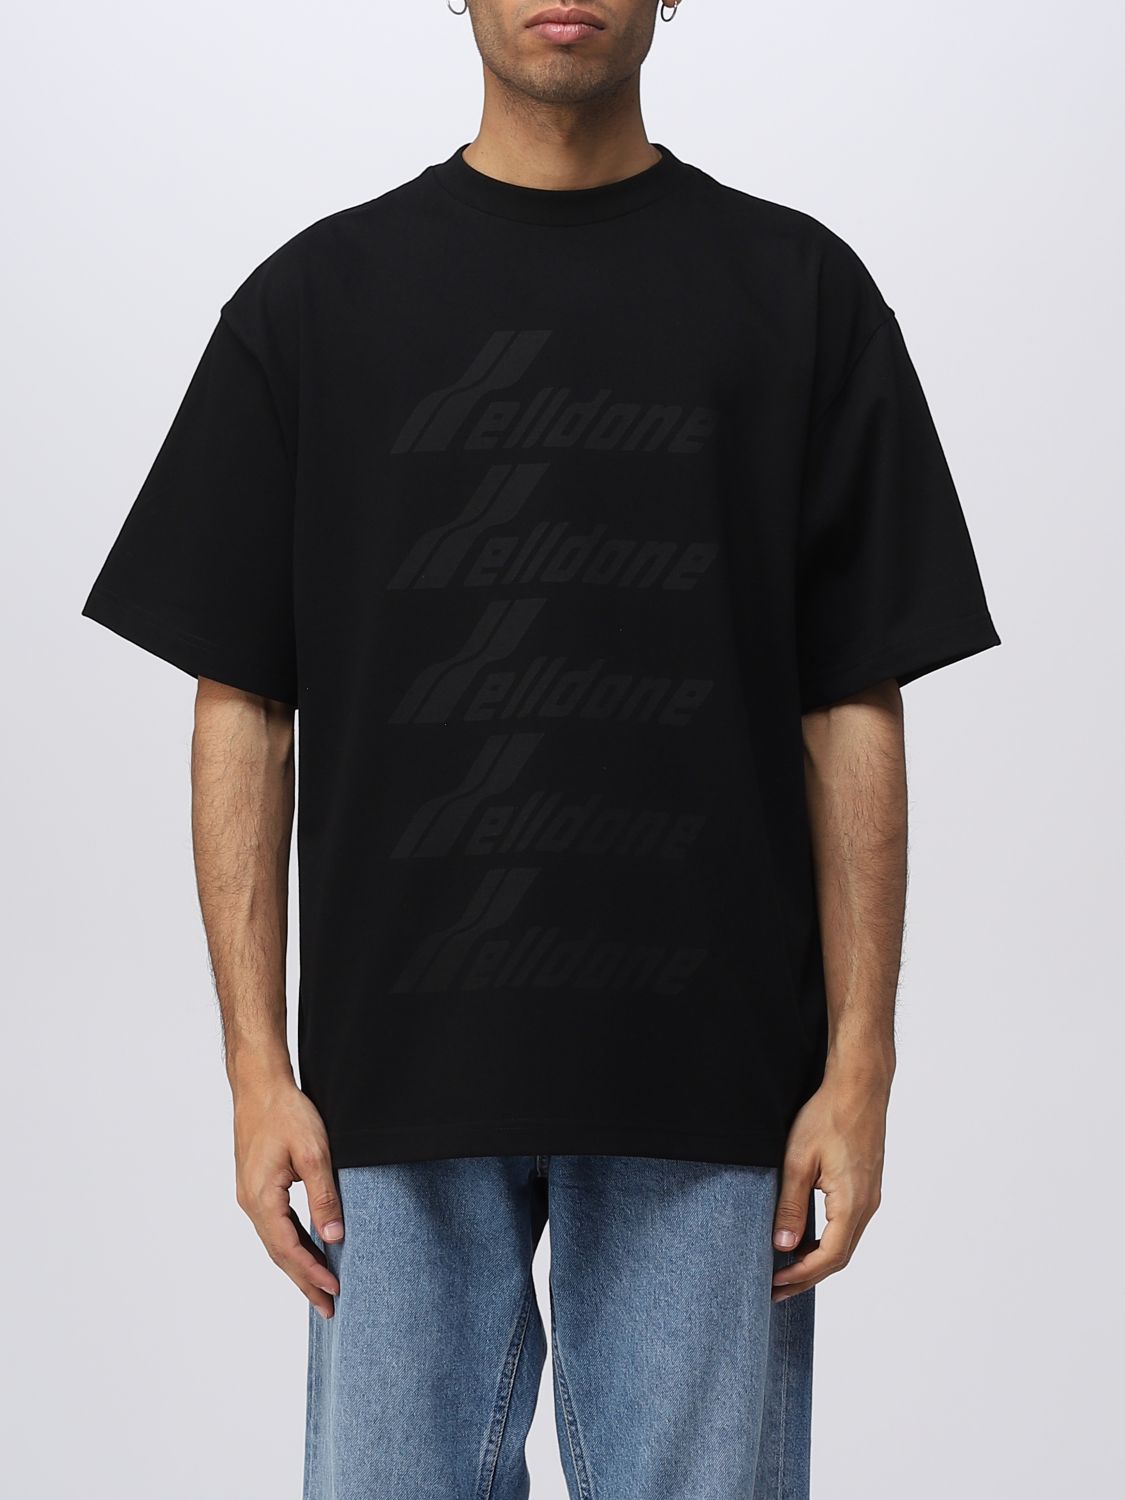 WE11DONE: t-shirt for man - Black | We11Done t-shirt WDTP620074U online ...